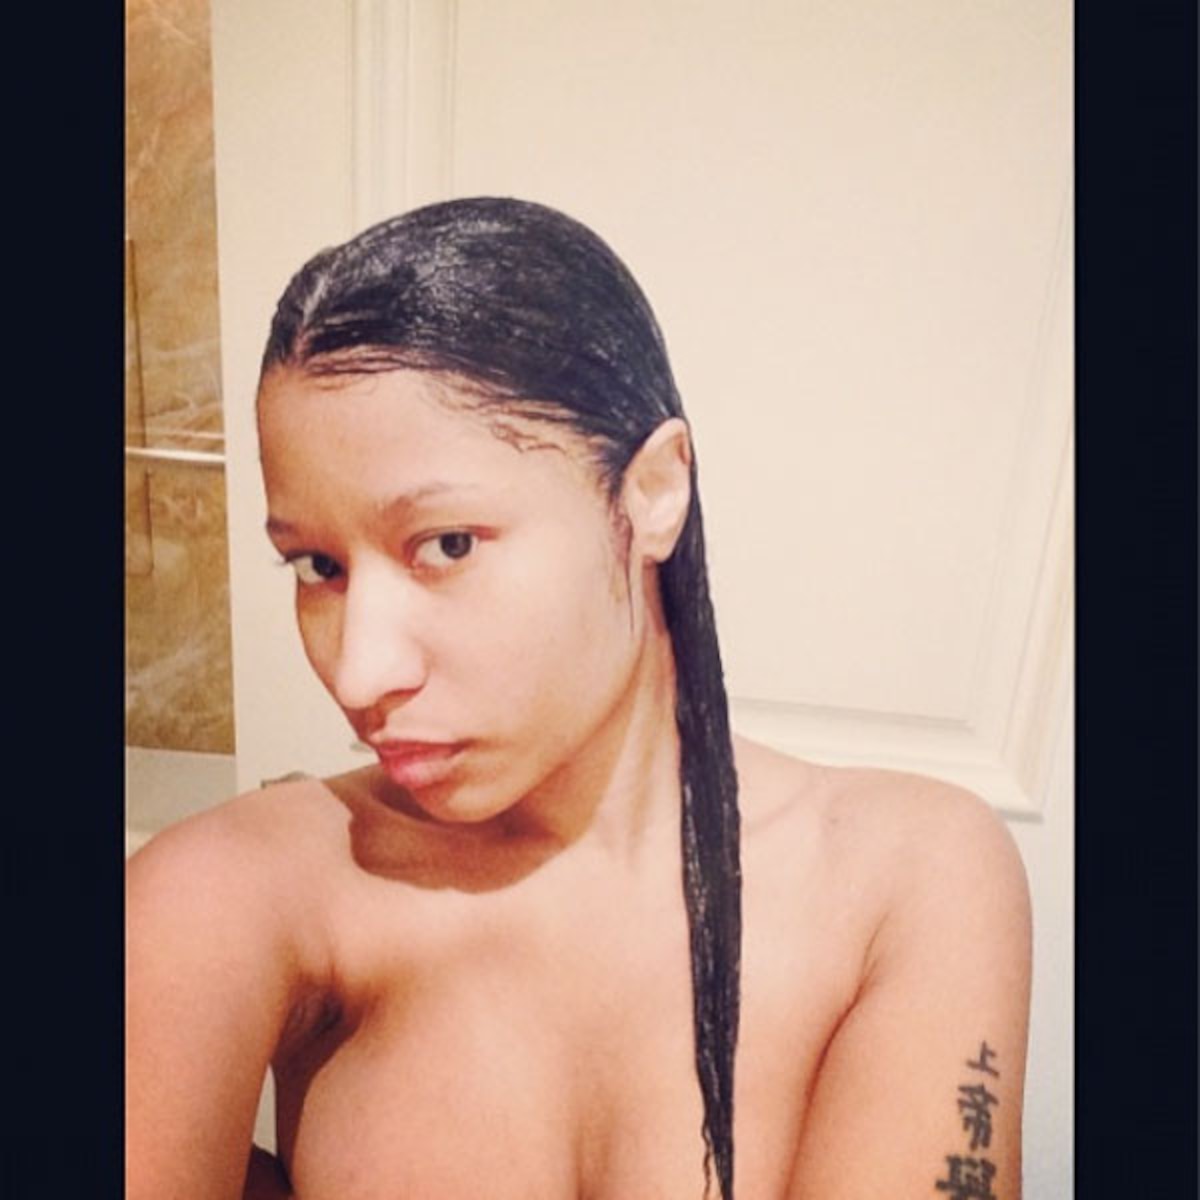 christine ryland recommends Pictures Of Nicki Minaj Naked